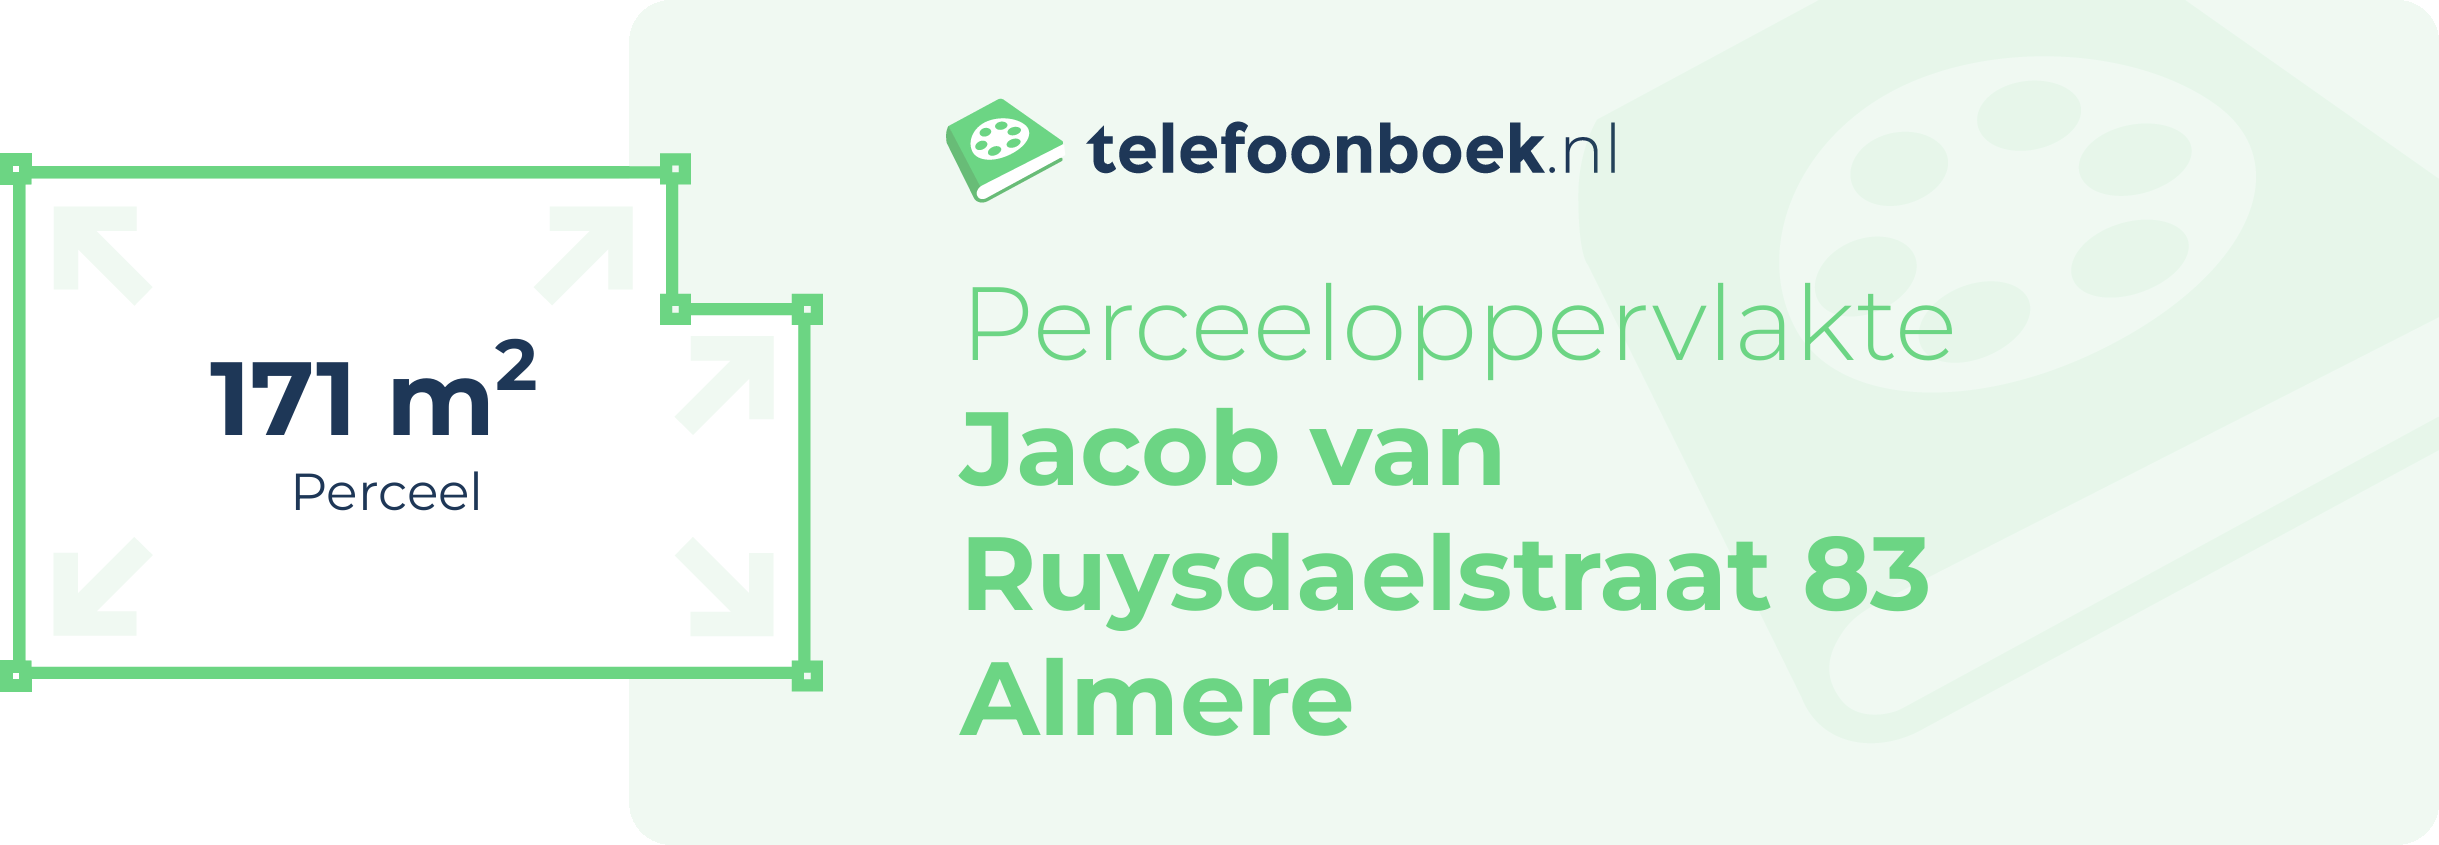 Perceeloppervlakte Jacob Van Ruysdaelstraat 83 Almere